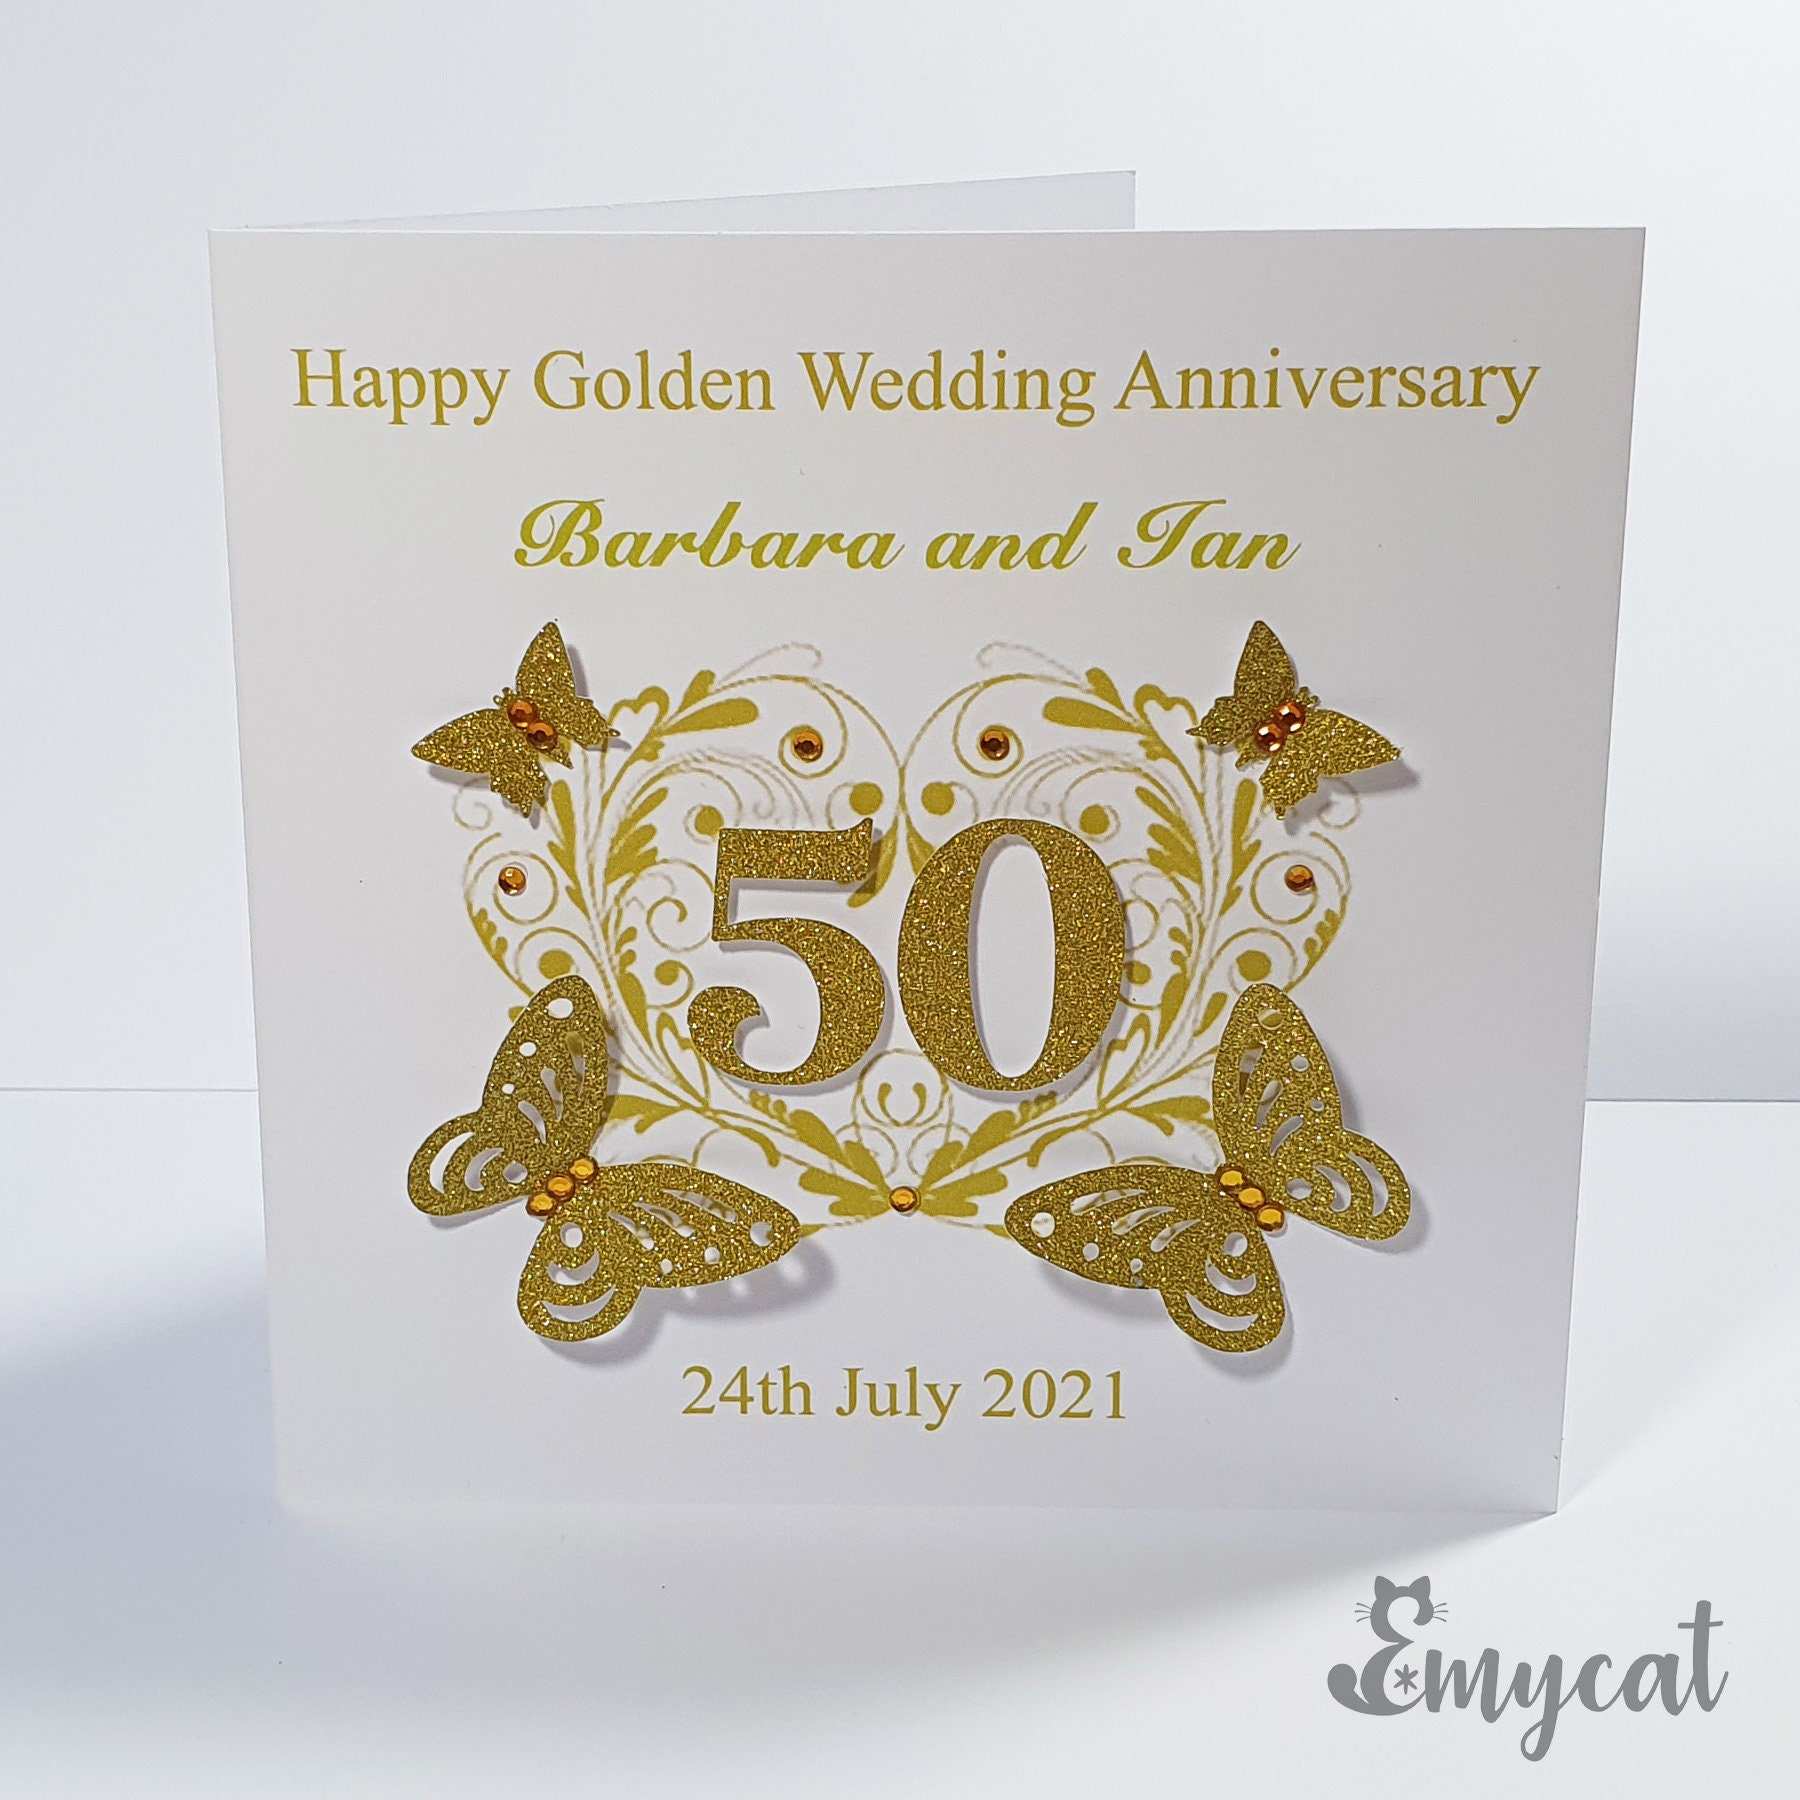 Personalised Handmade Golden Wedding Anniversary Card 50th Etsy Uk